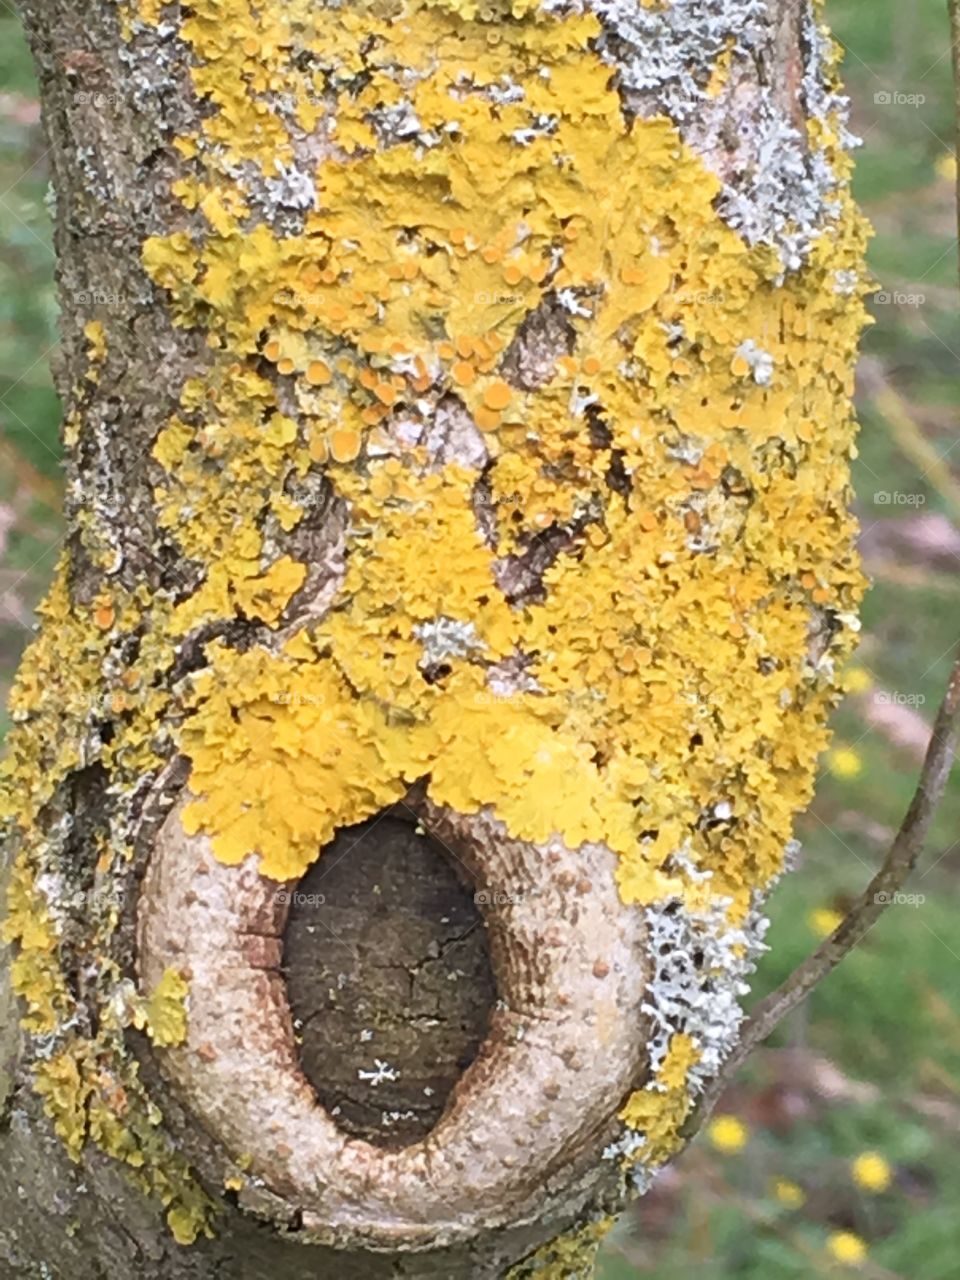 Yellow fungus on tree trunk